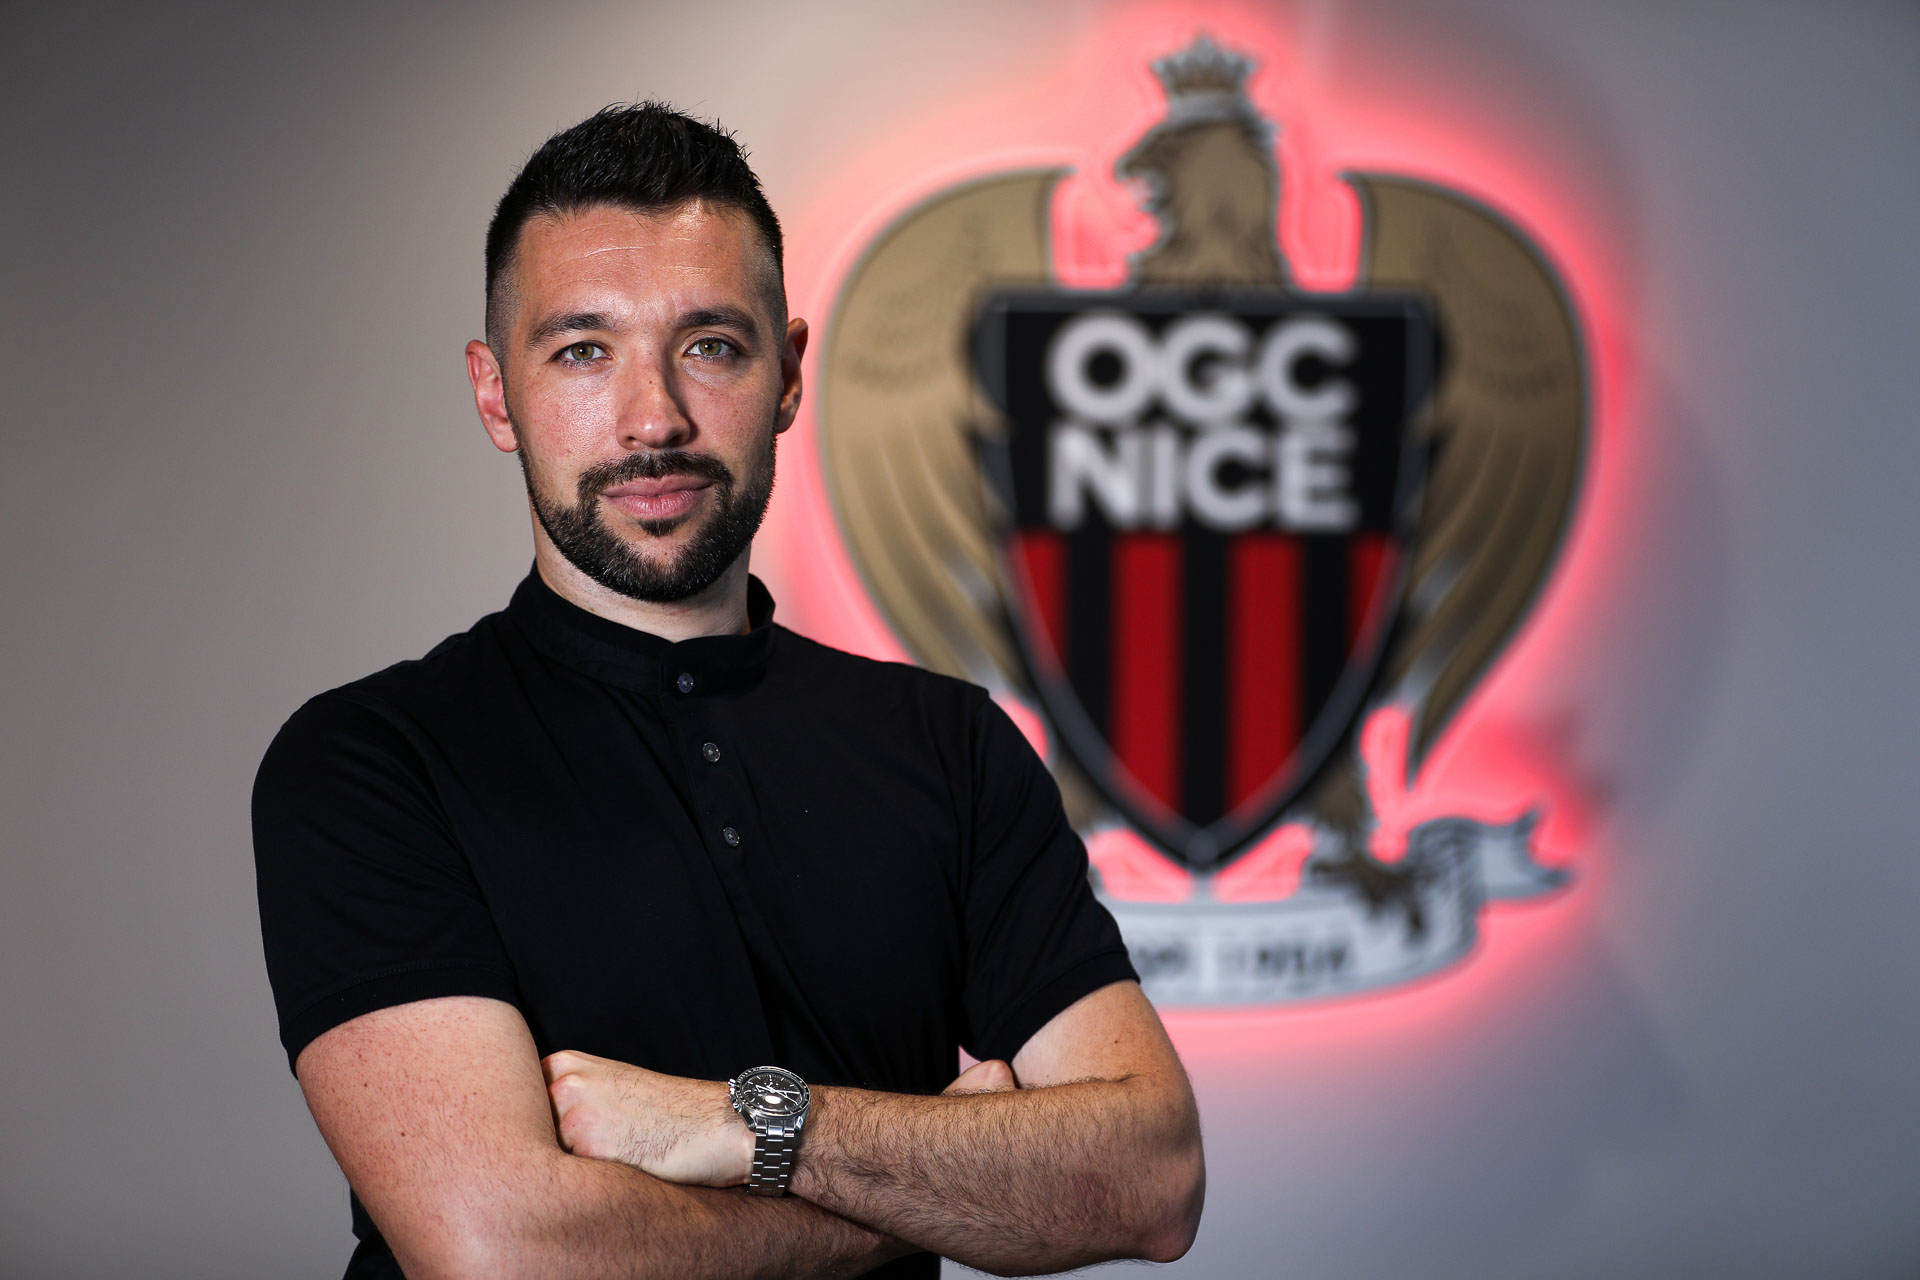 Francesco Farioli named as OGC Nice's new manager | Club